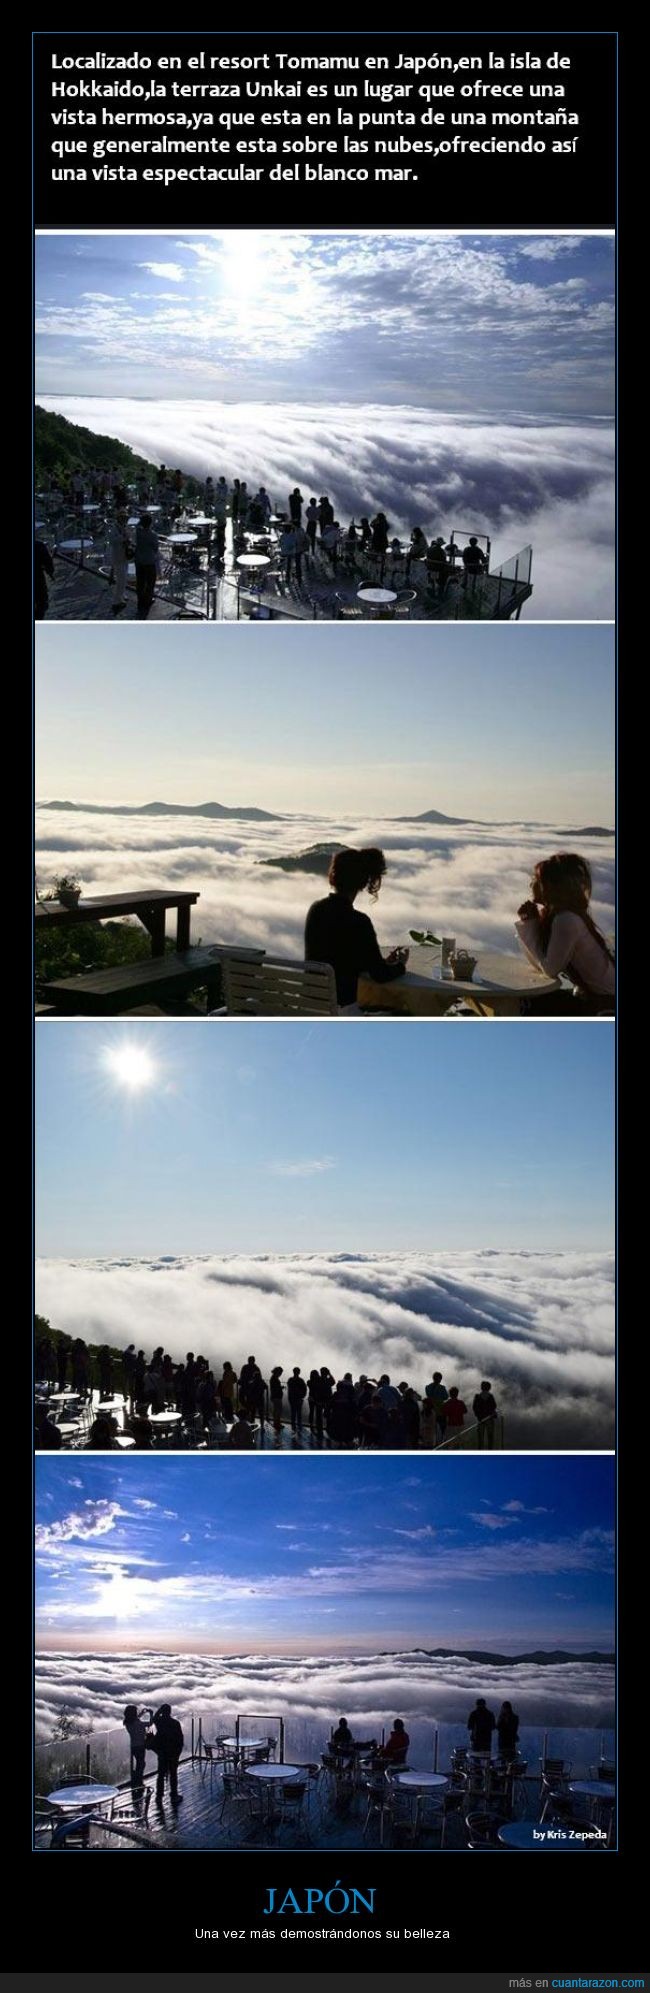 japon,resort,montaña,nubes,mar,anda se ve altisimo